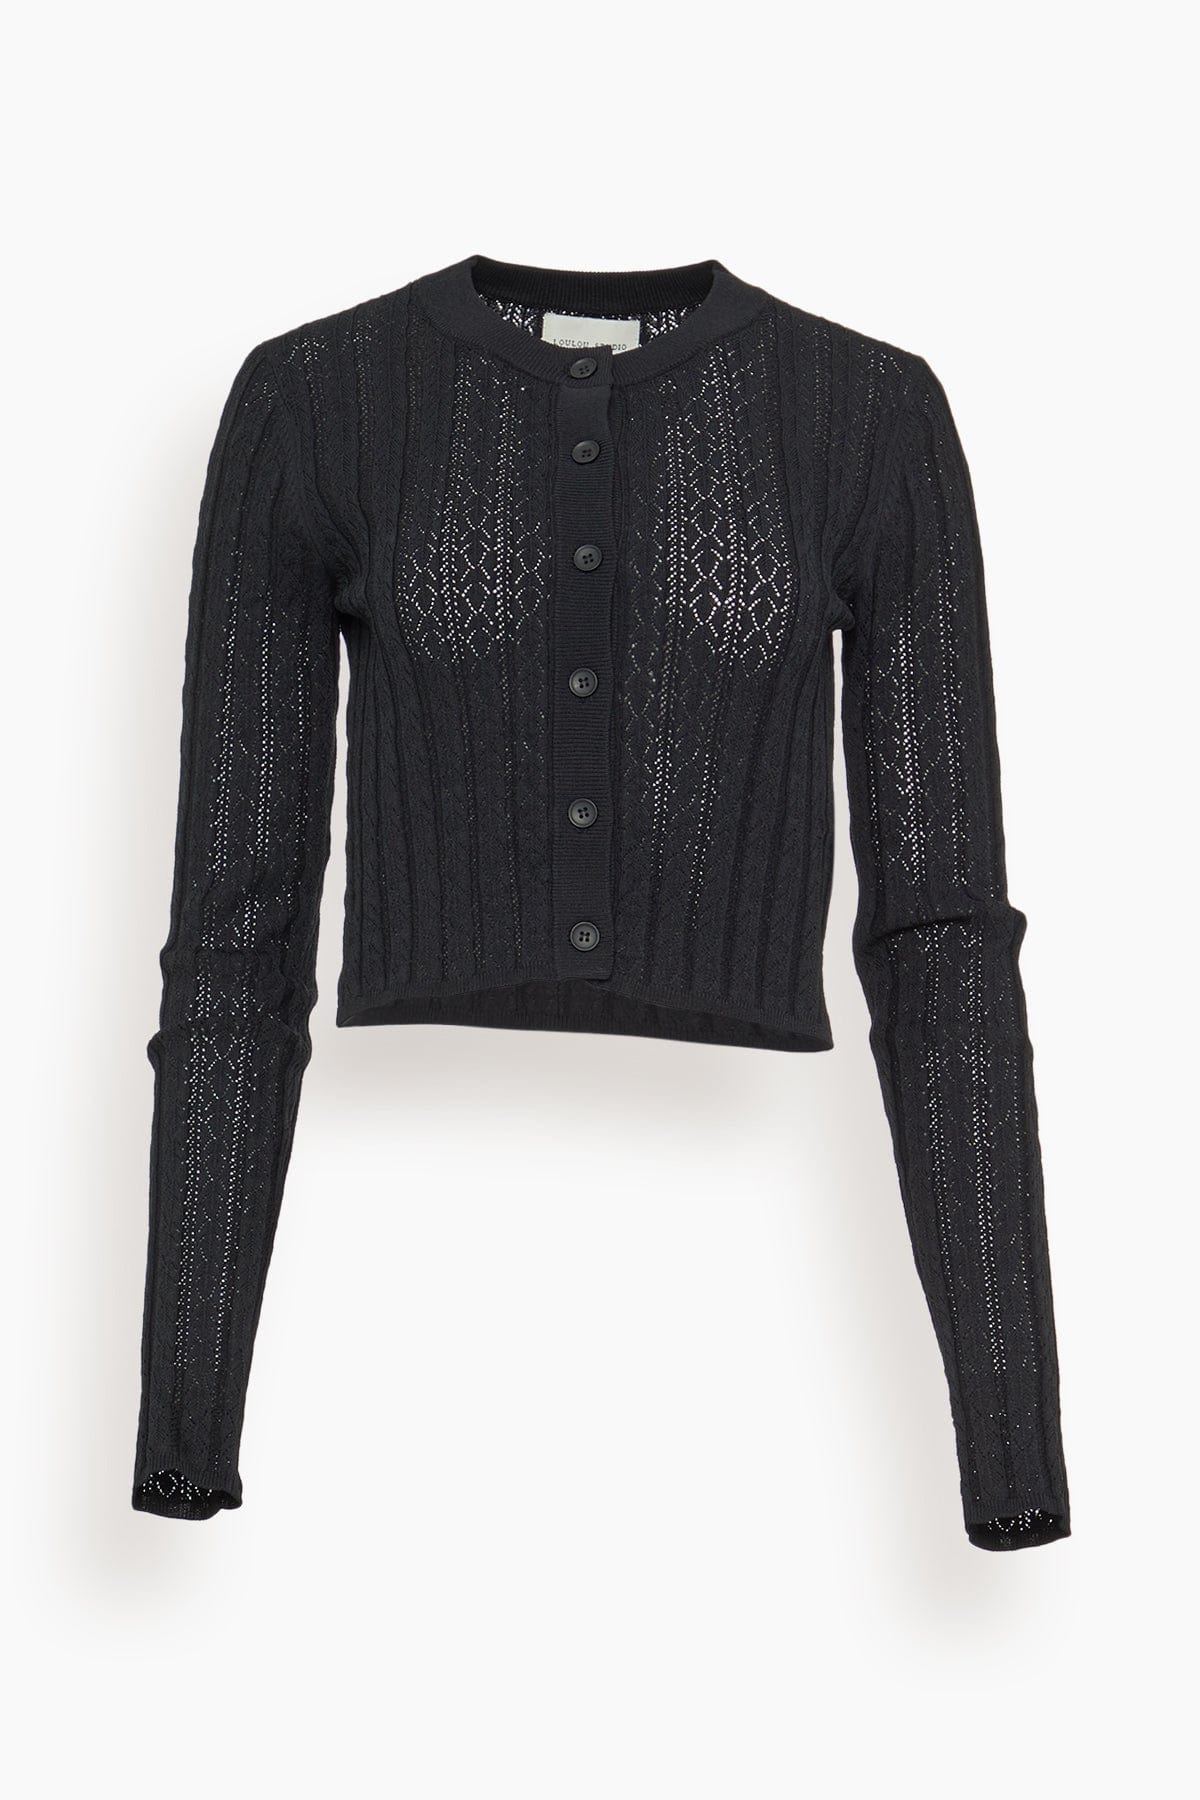 Loulou Studio Sweaters Adiro Cardigan in Black